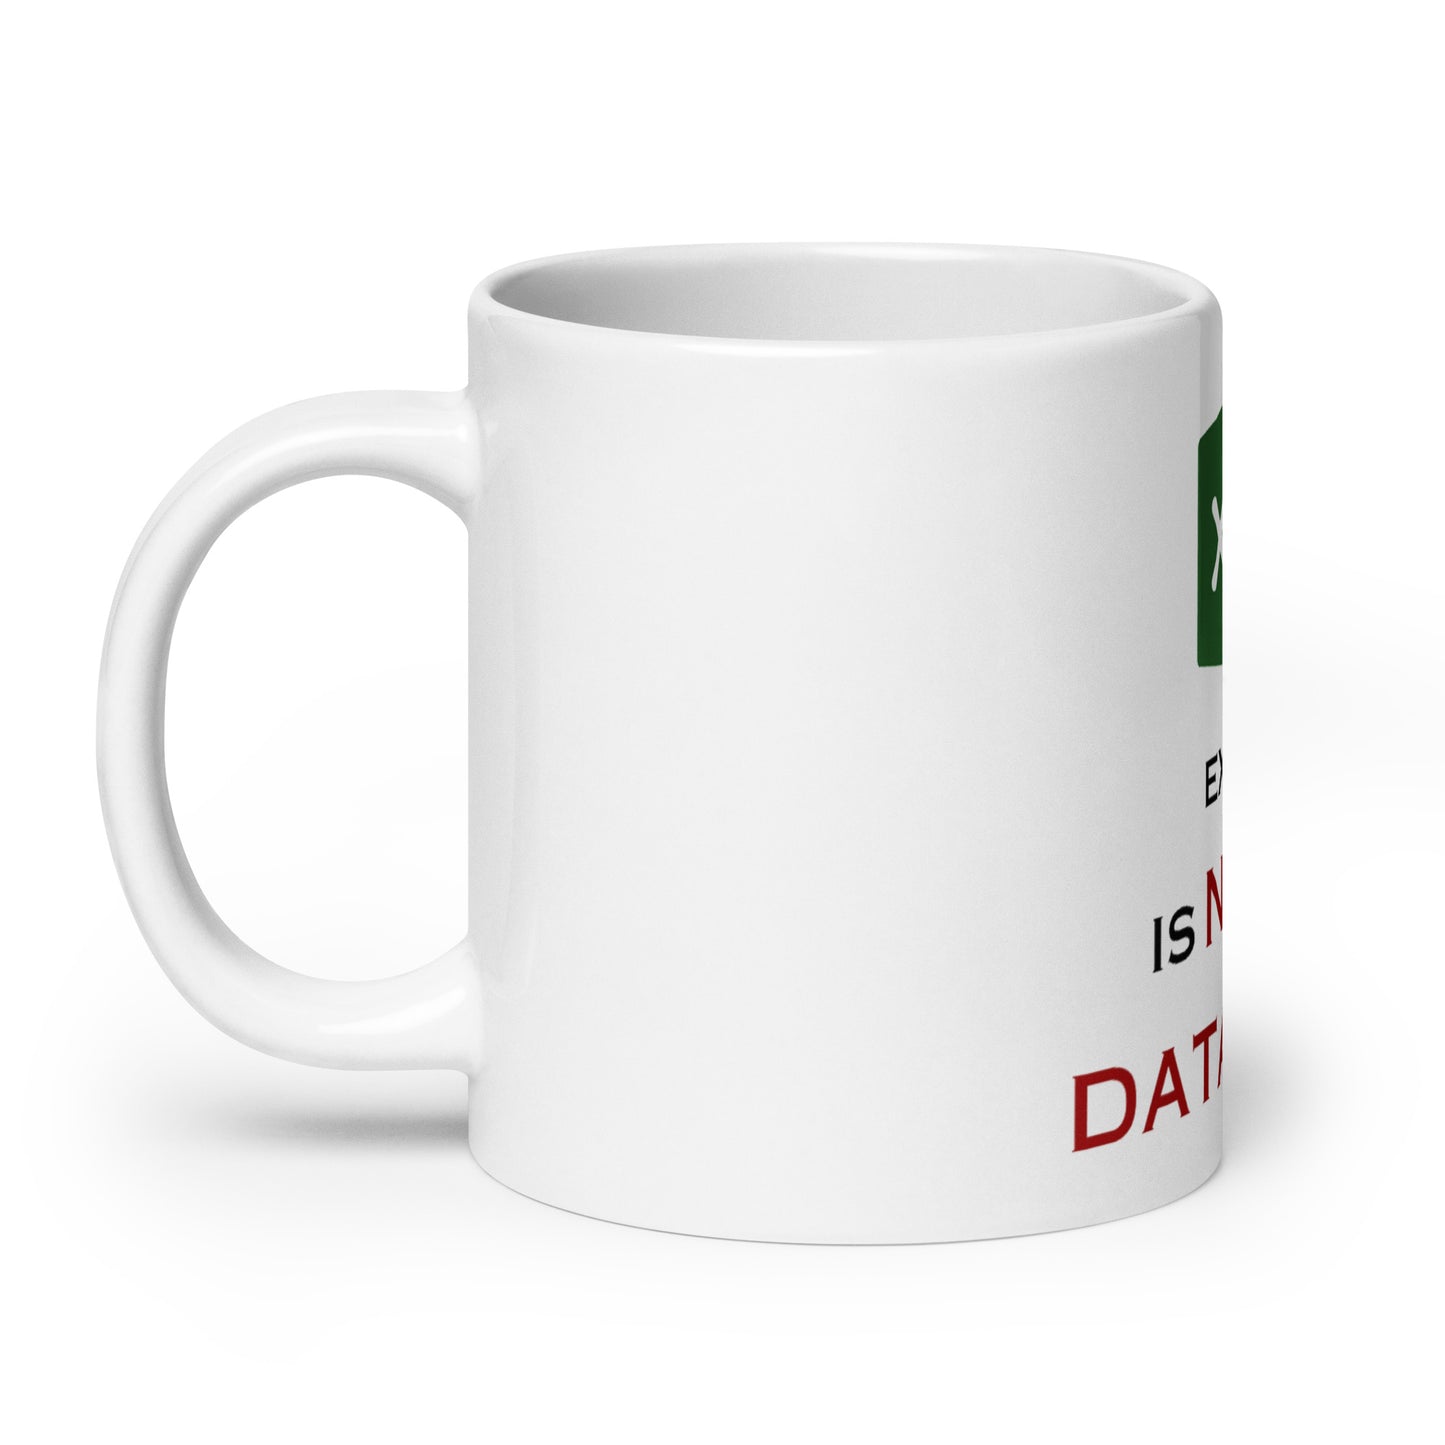 Excel glossy mug